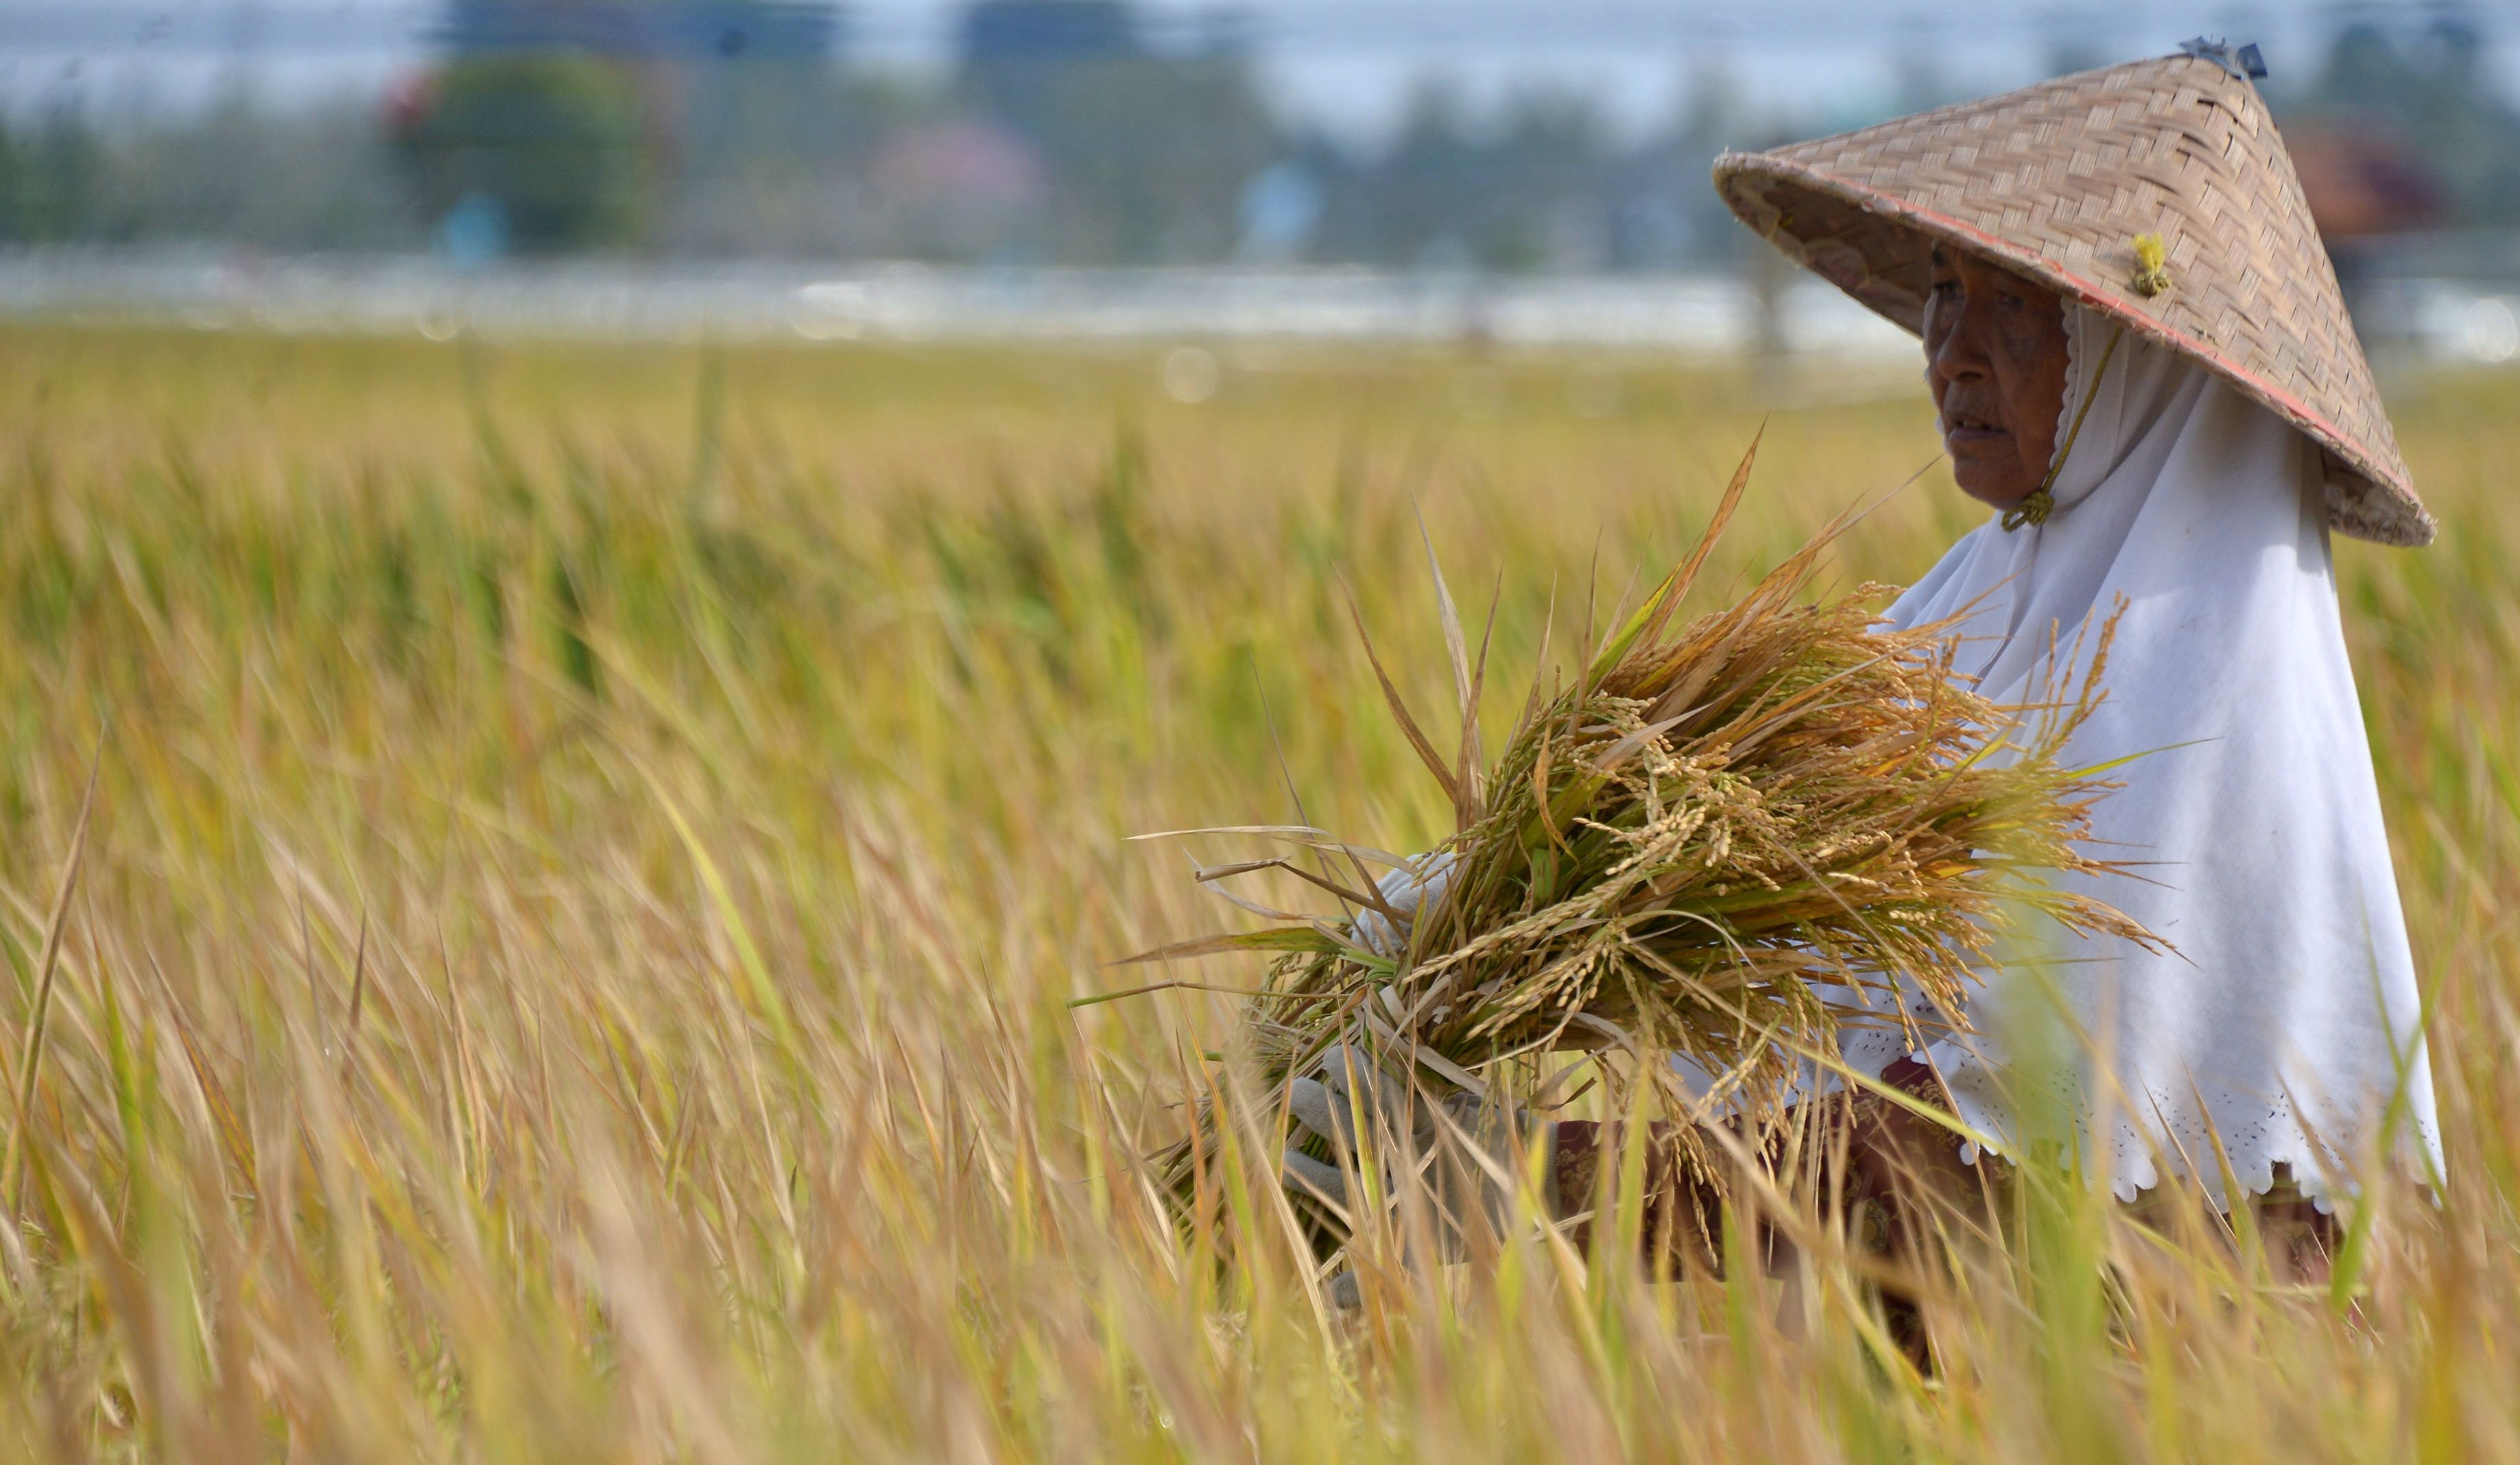 Petani memanen padi di Desa Limpok, Kecamatan Krueng Baruna Jaya, Kabupaten Aceh Besar, Aceh, Selasa, 2 Februari 2021. (Antara Foto/Ampelsa)